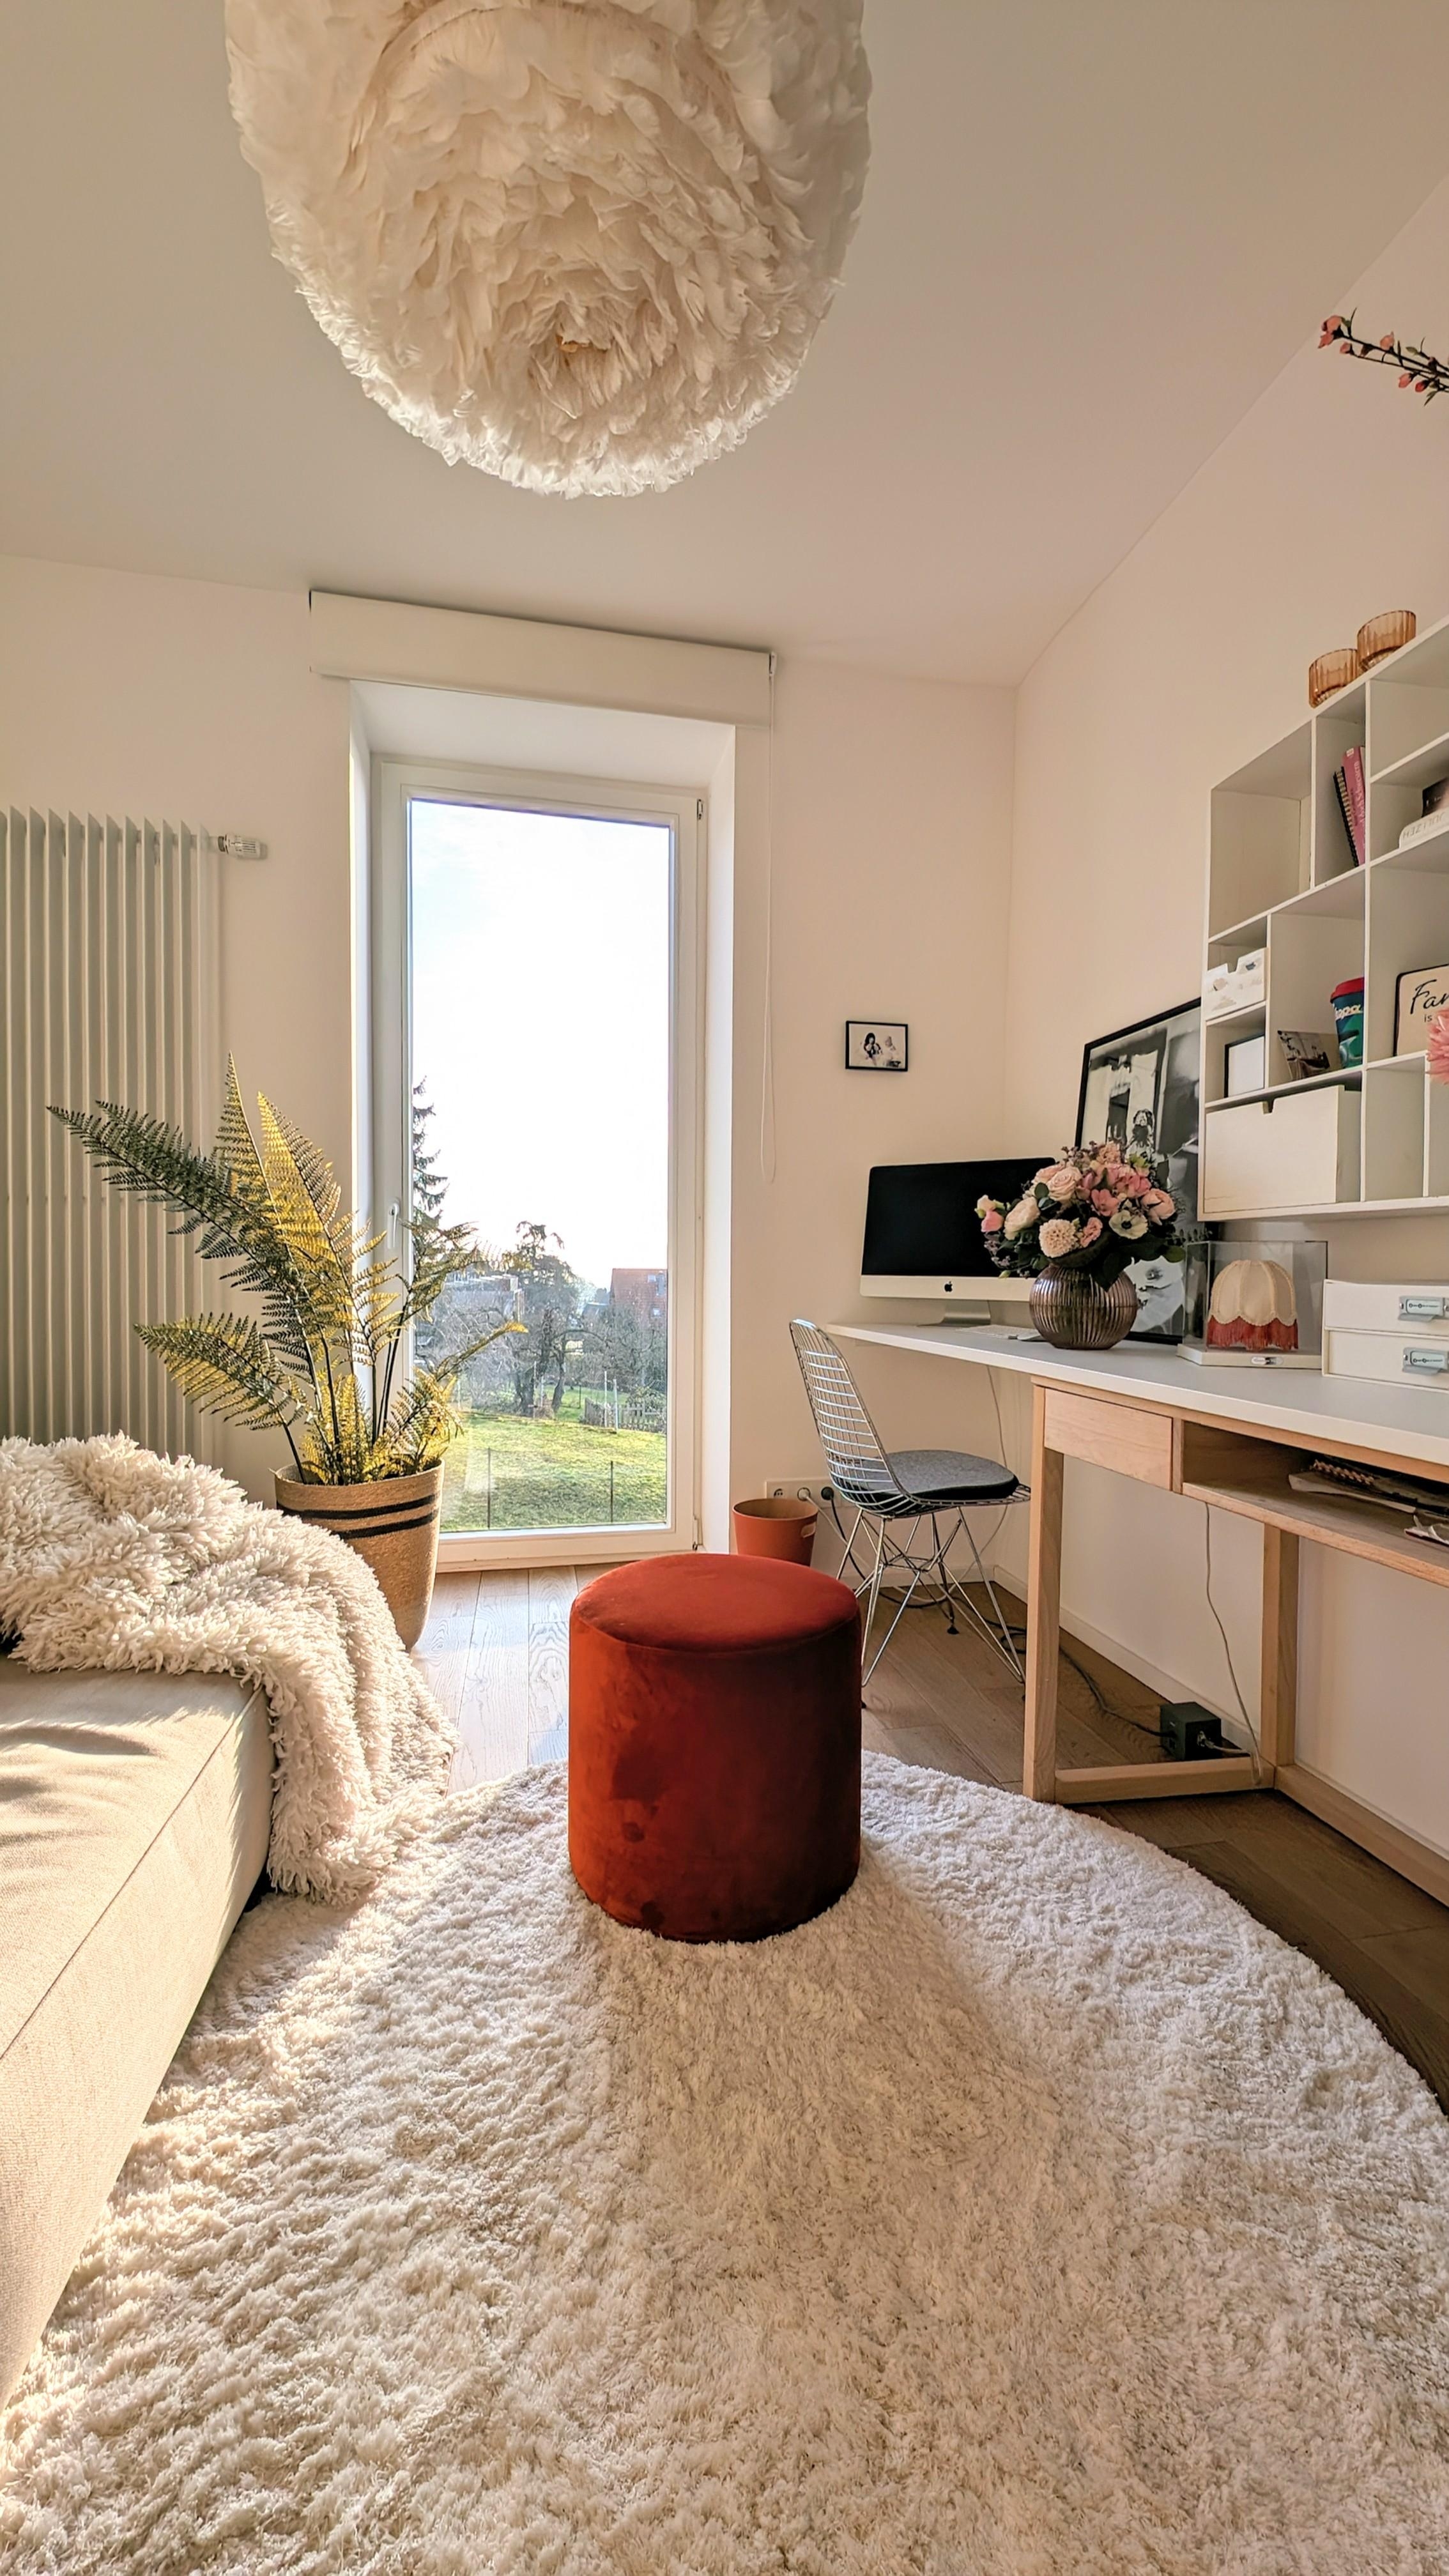 #Gästezimmer #homesweethome #interiordesign #interiordesigner